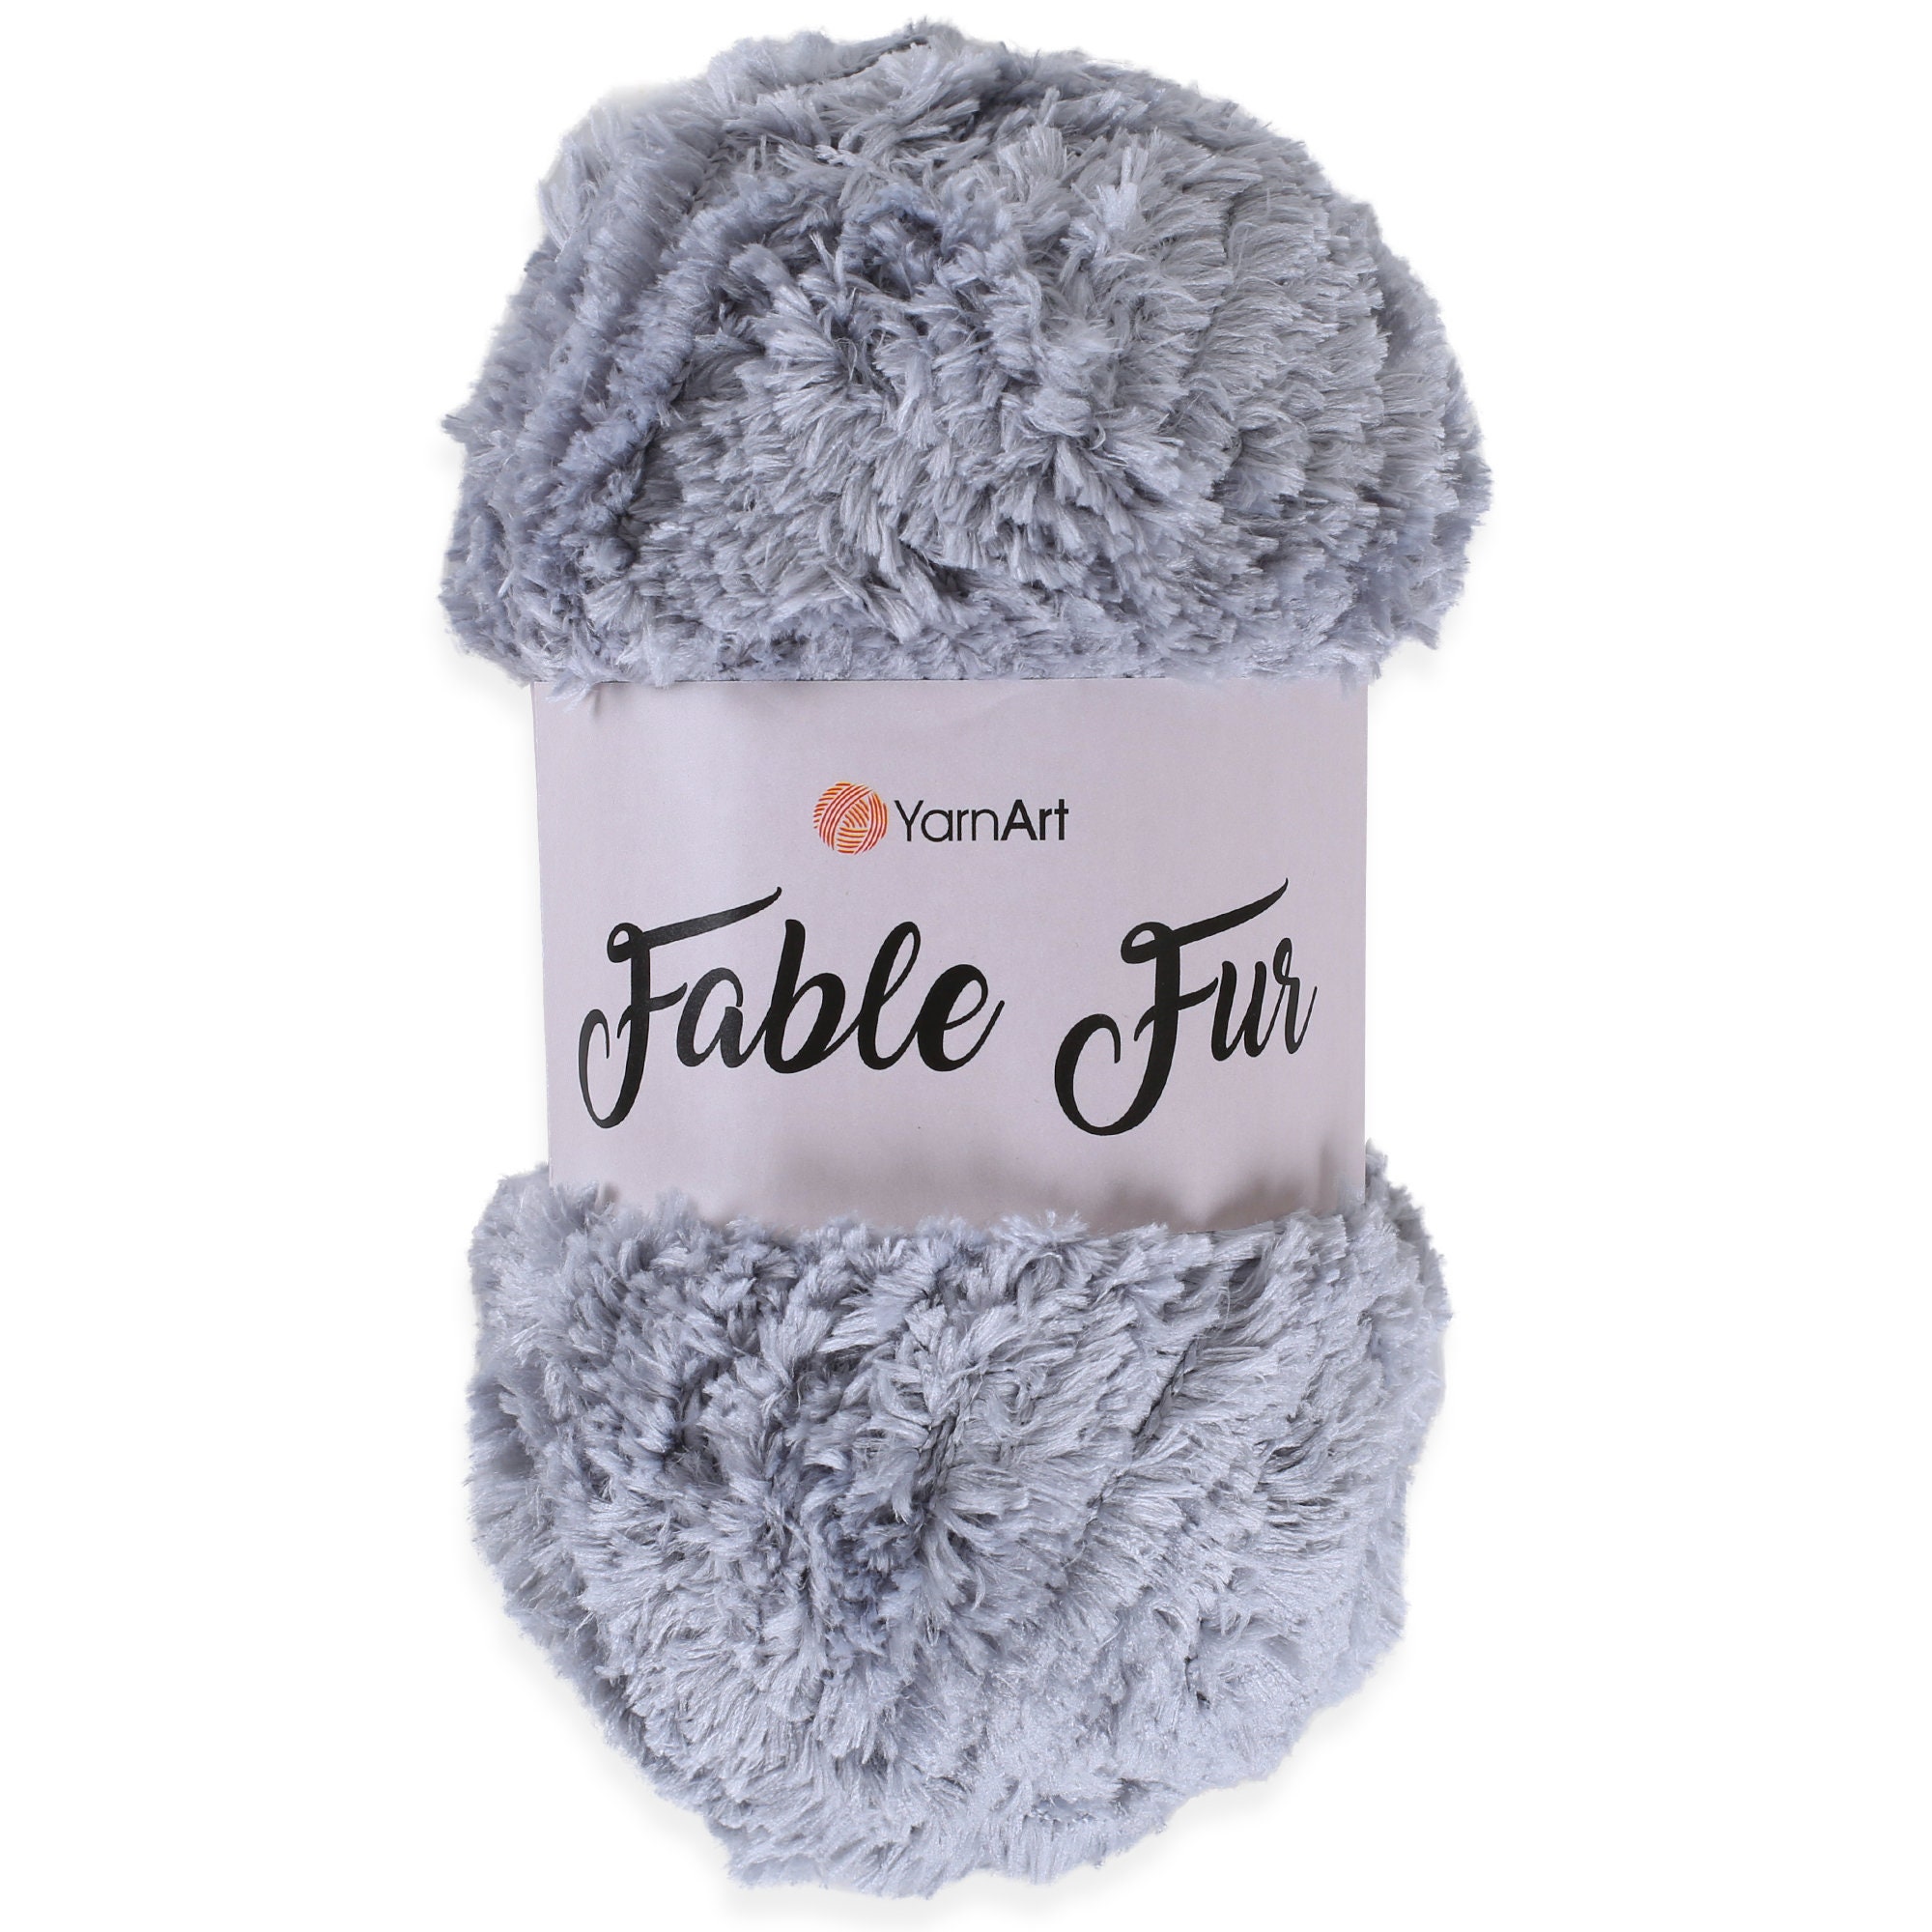 YarnArt Fable Fur Yarn- Light Green - 983